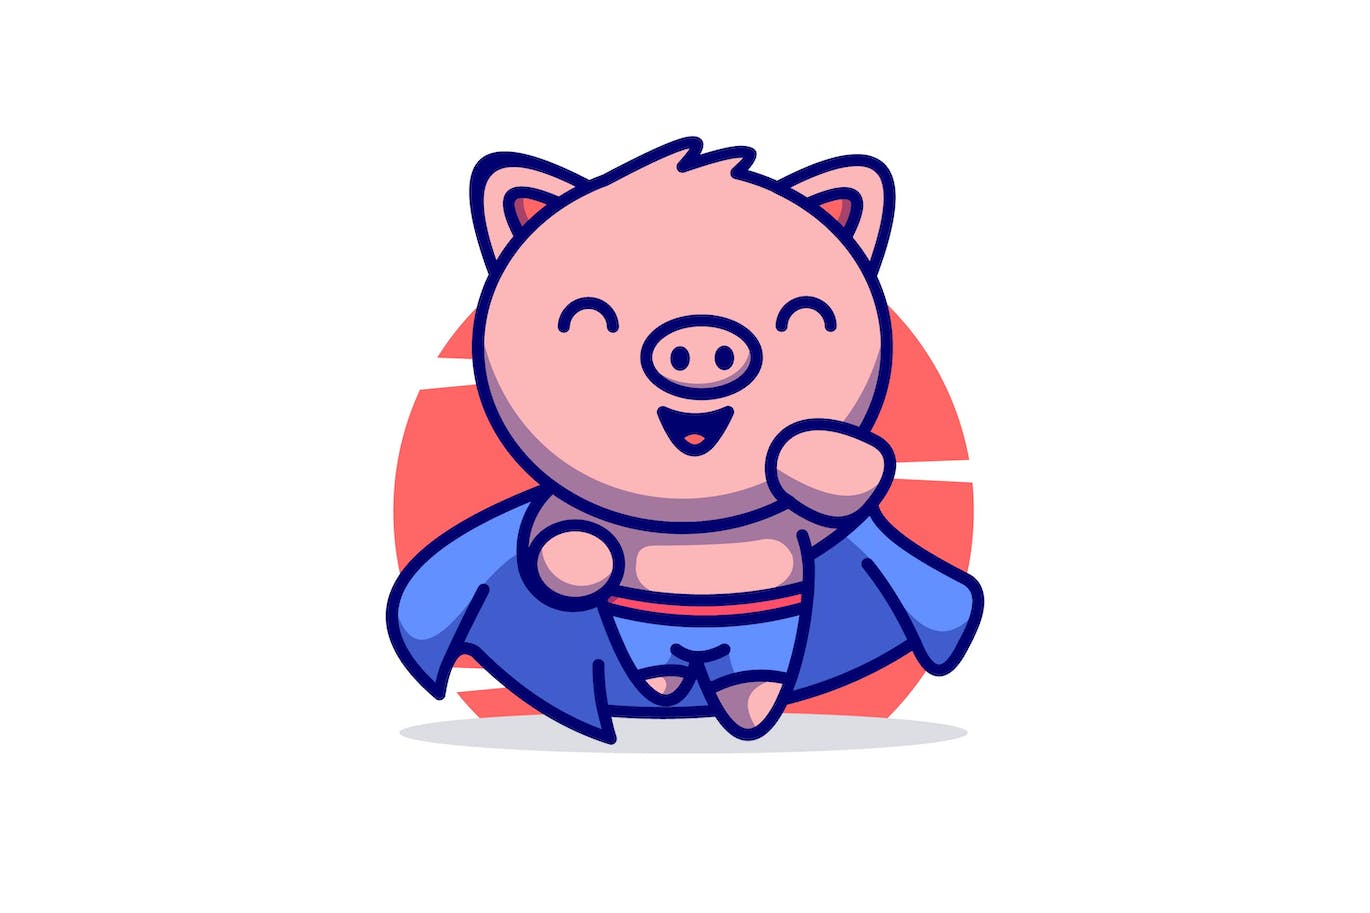 超级英雄小猪Logo插画 Superhero piglet illustration-1